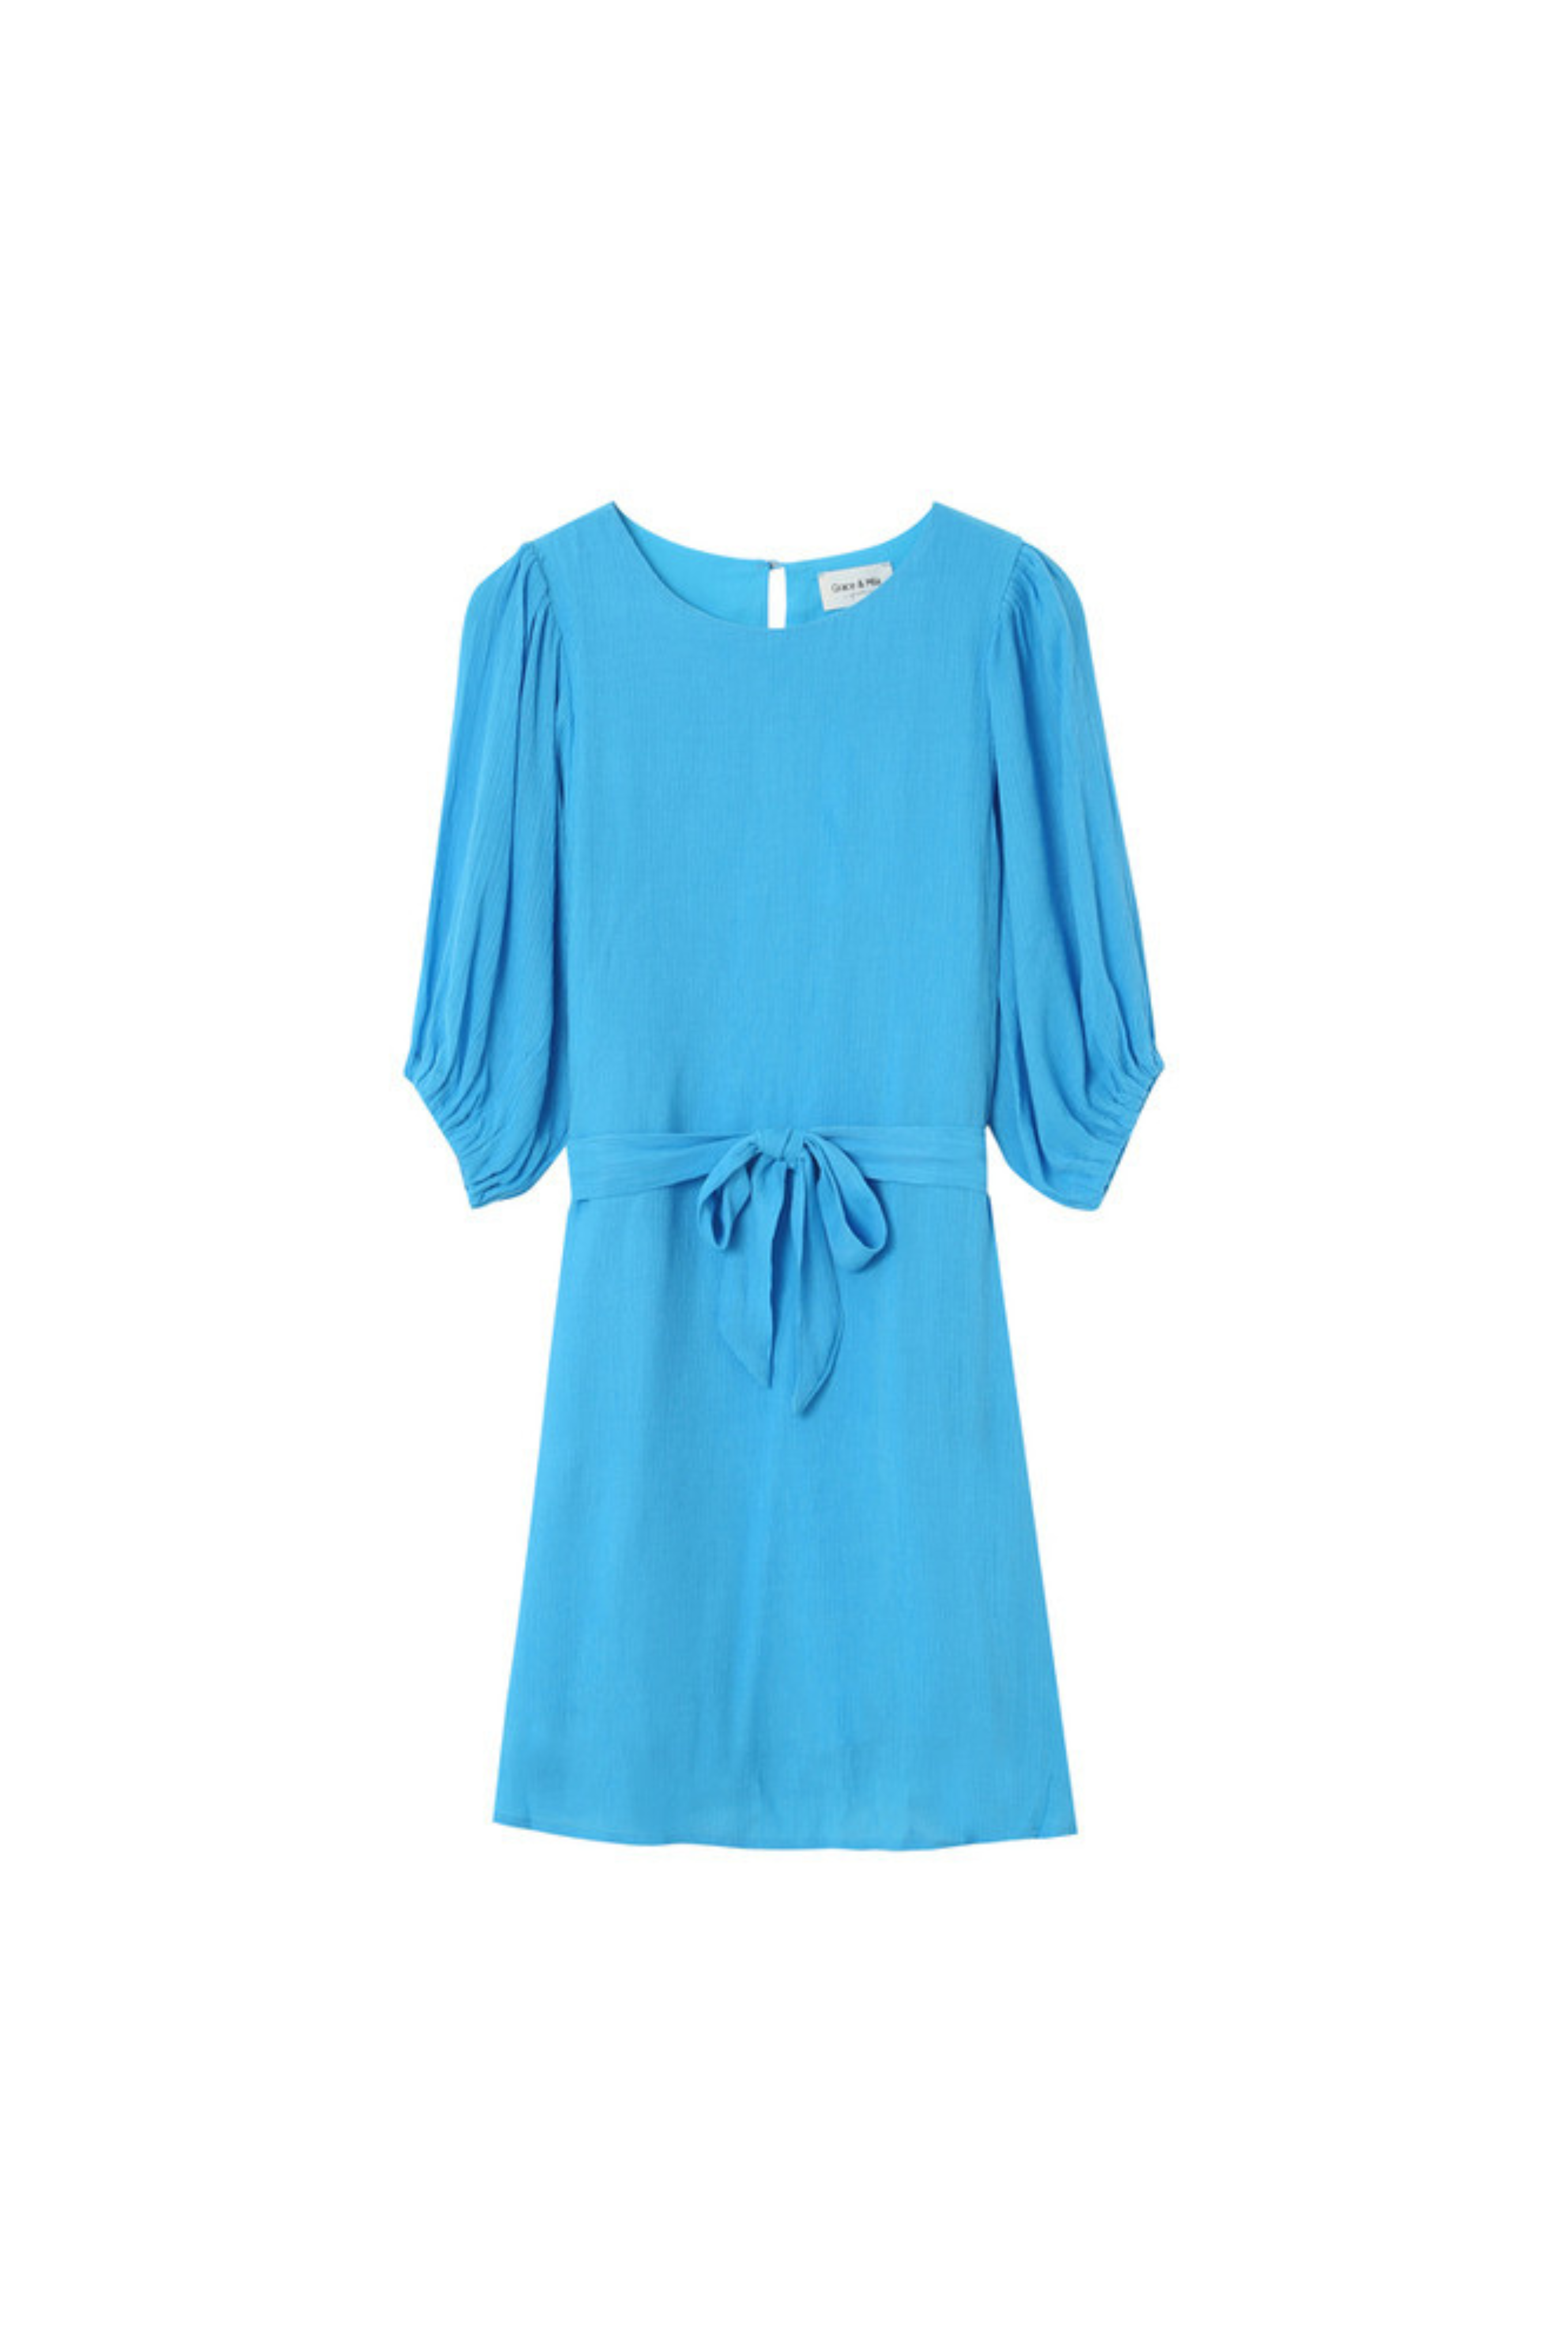 MELISSA DRESS - BLUE